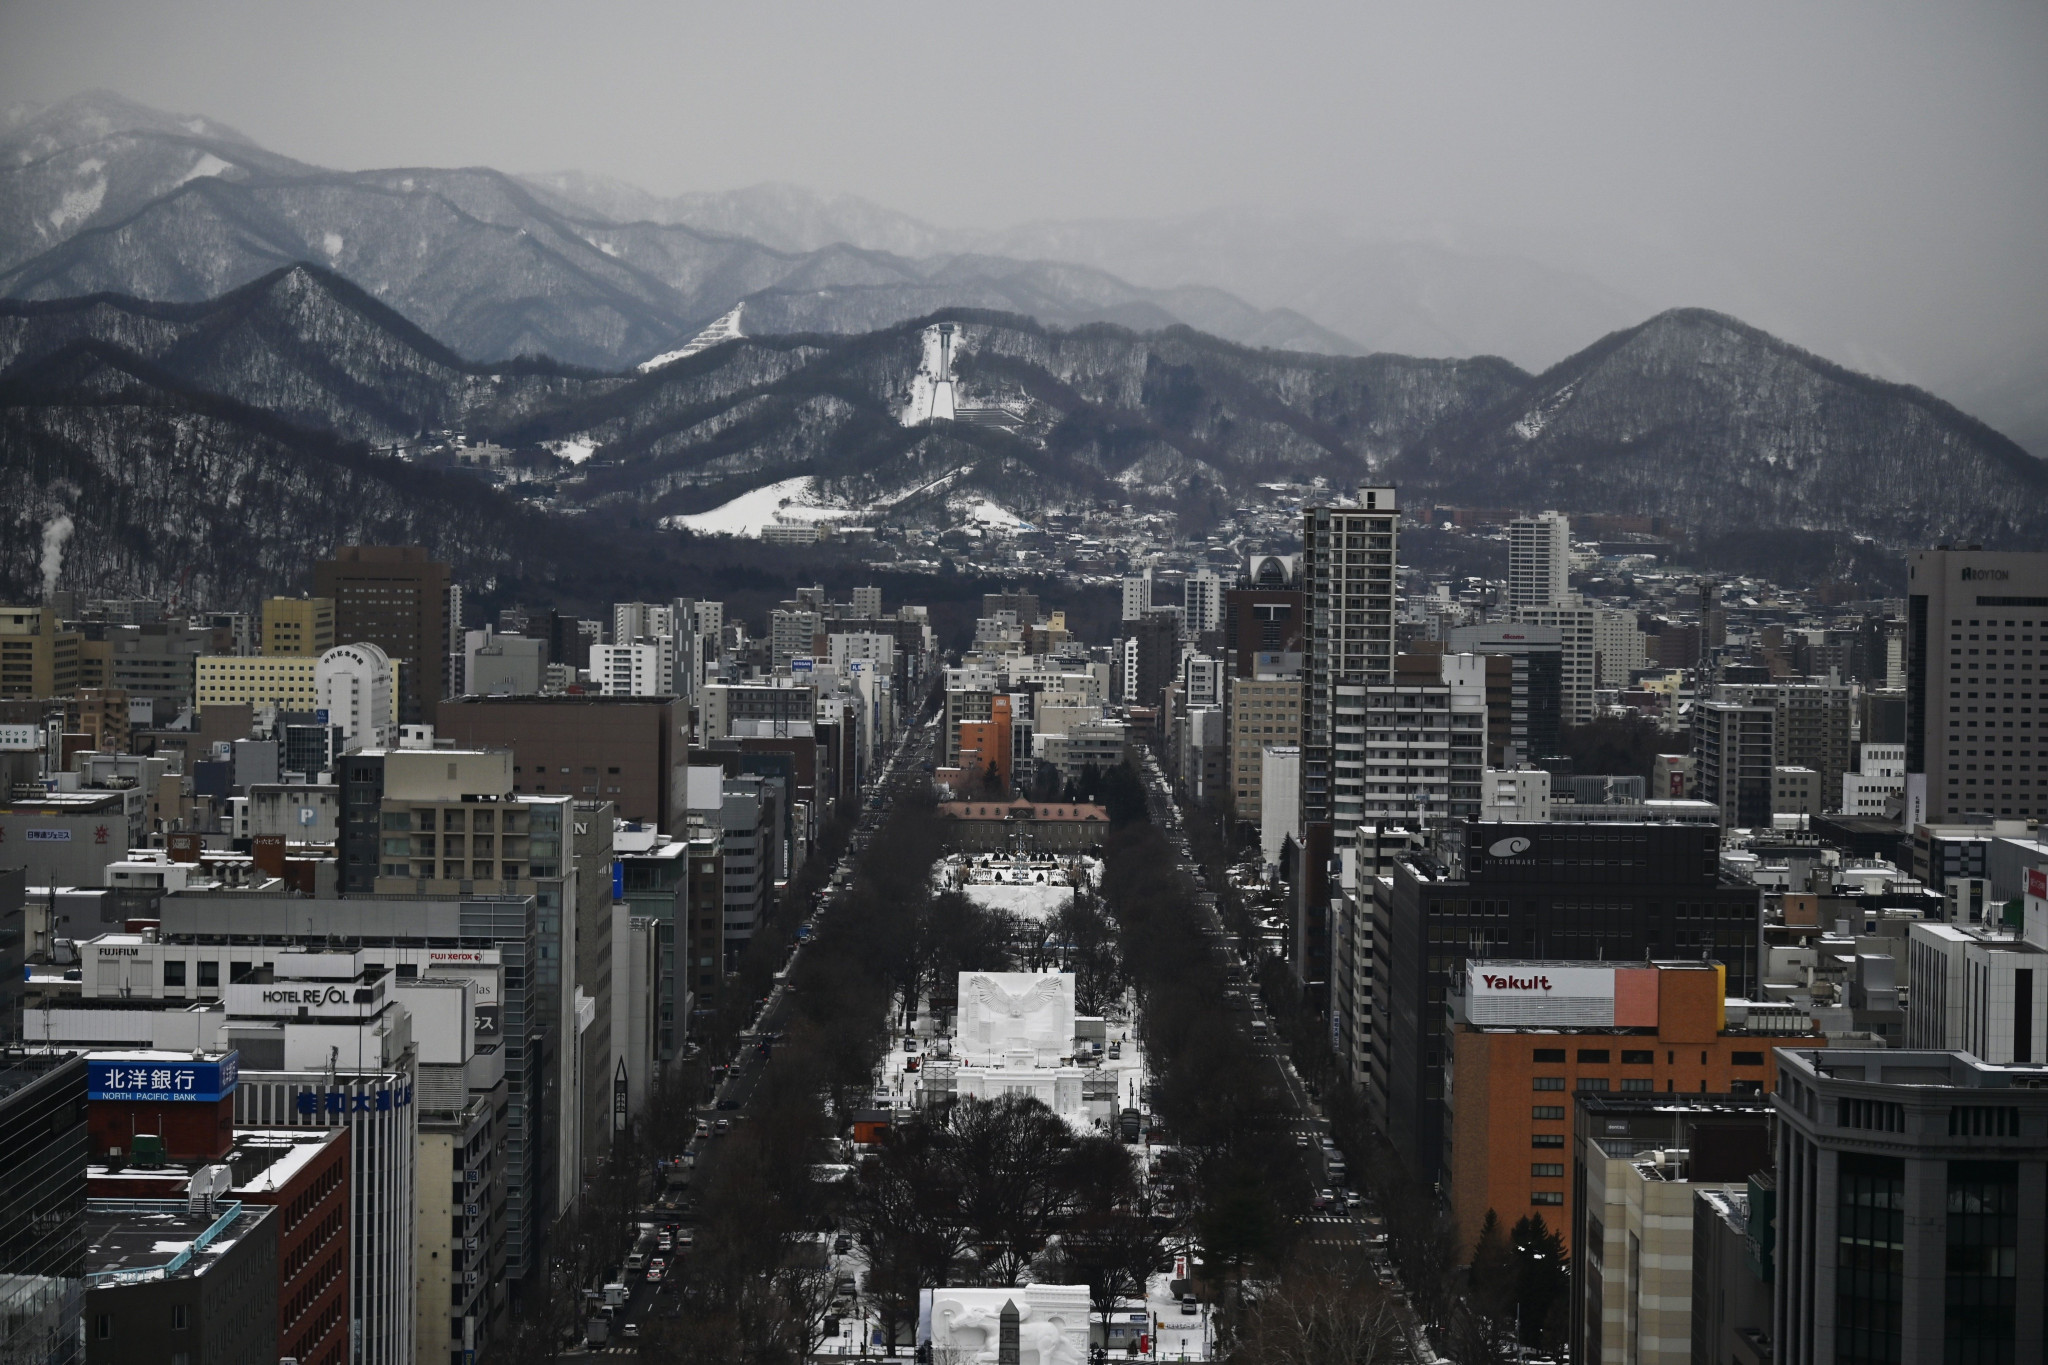 Tokyo 2020 marathon test event in Sapporo scheduled for May